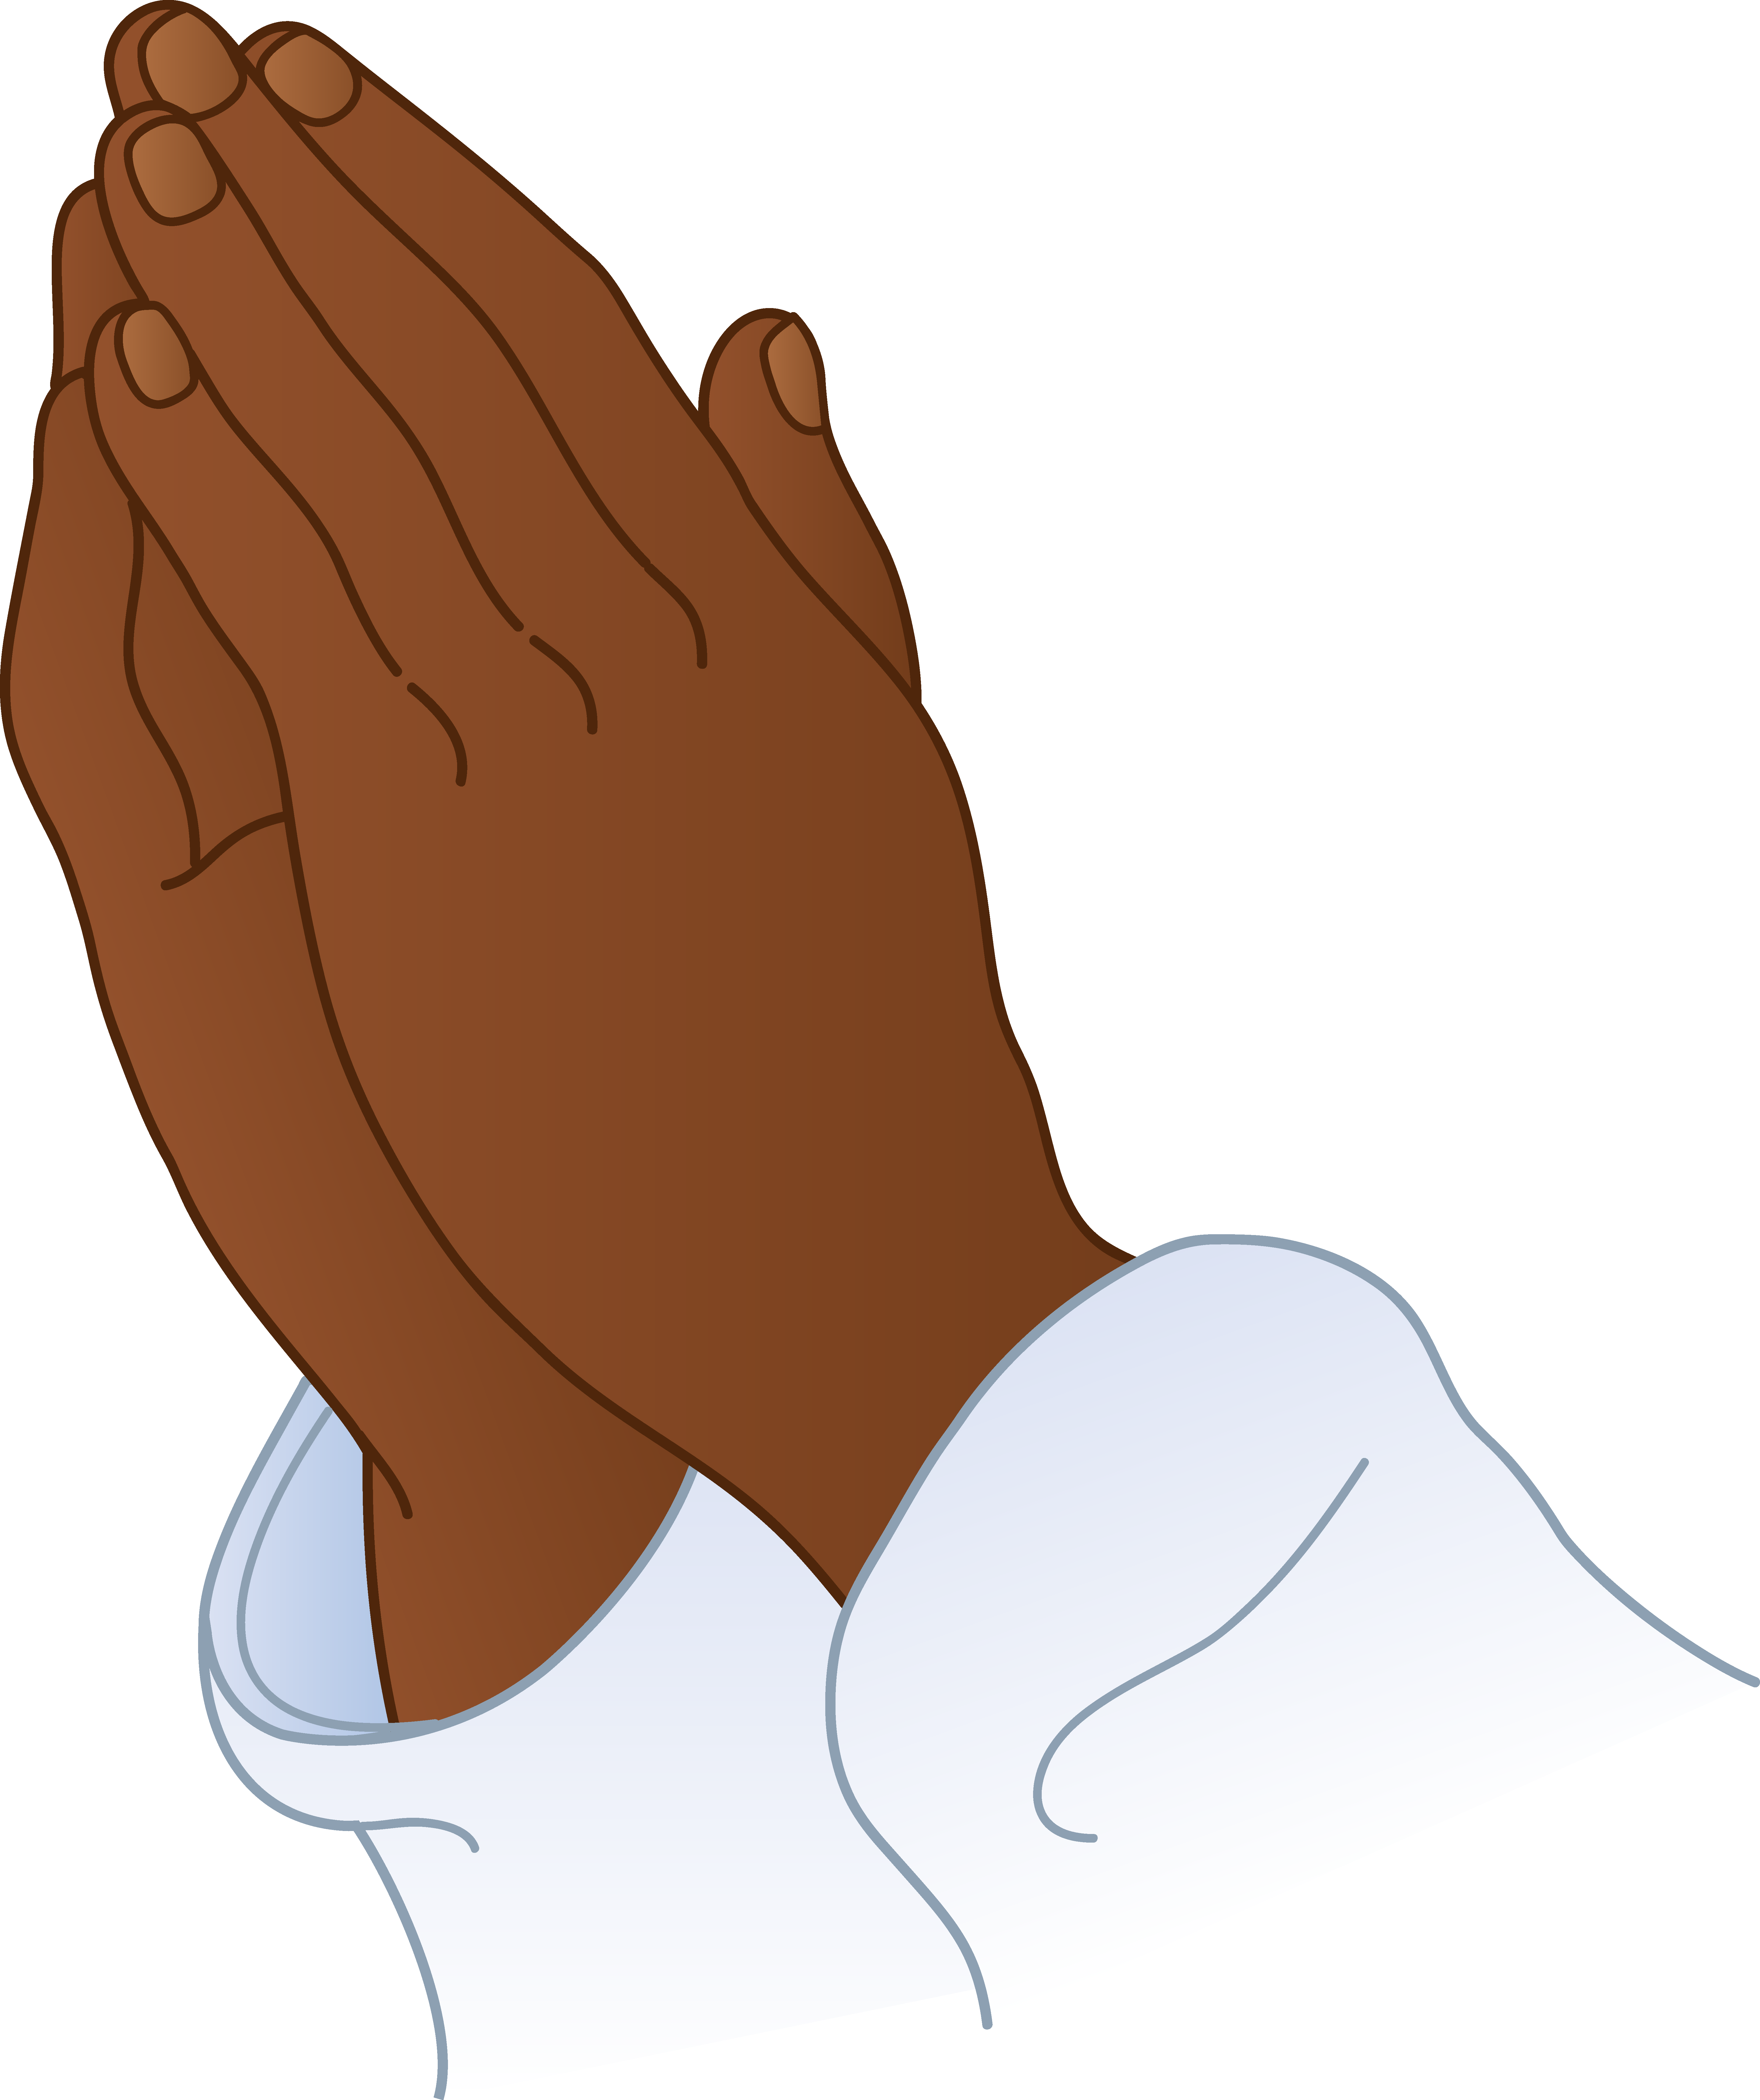 Black praying hands clipart